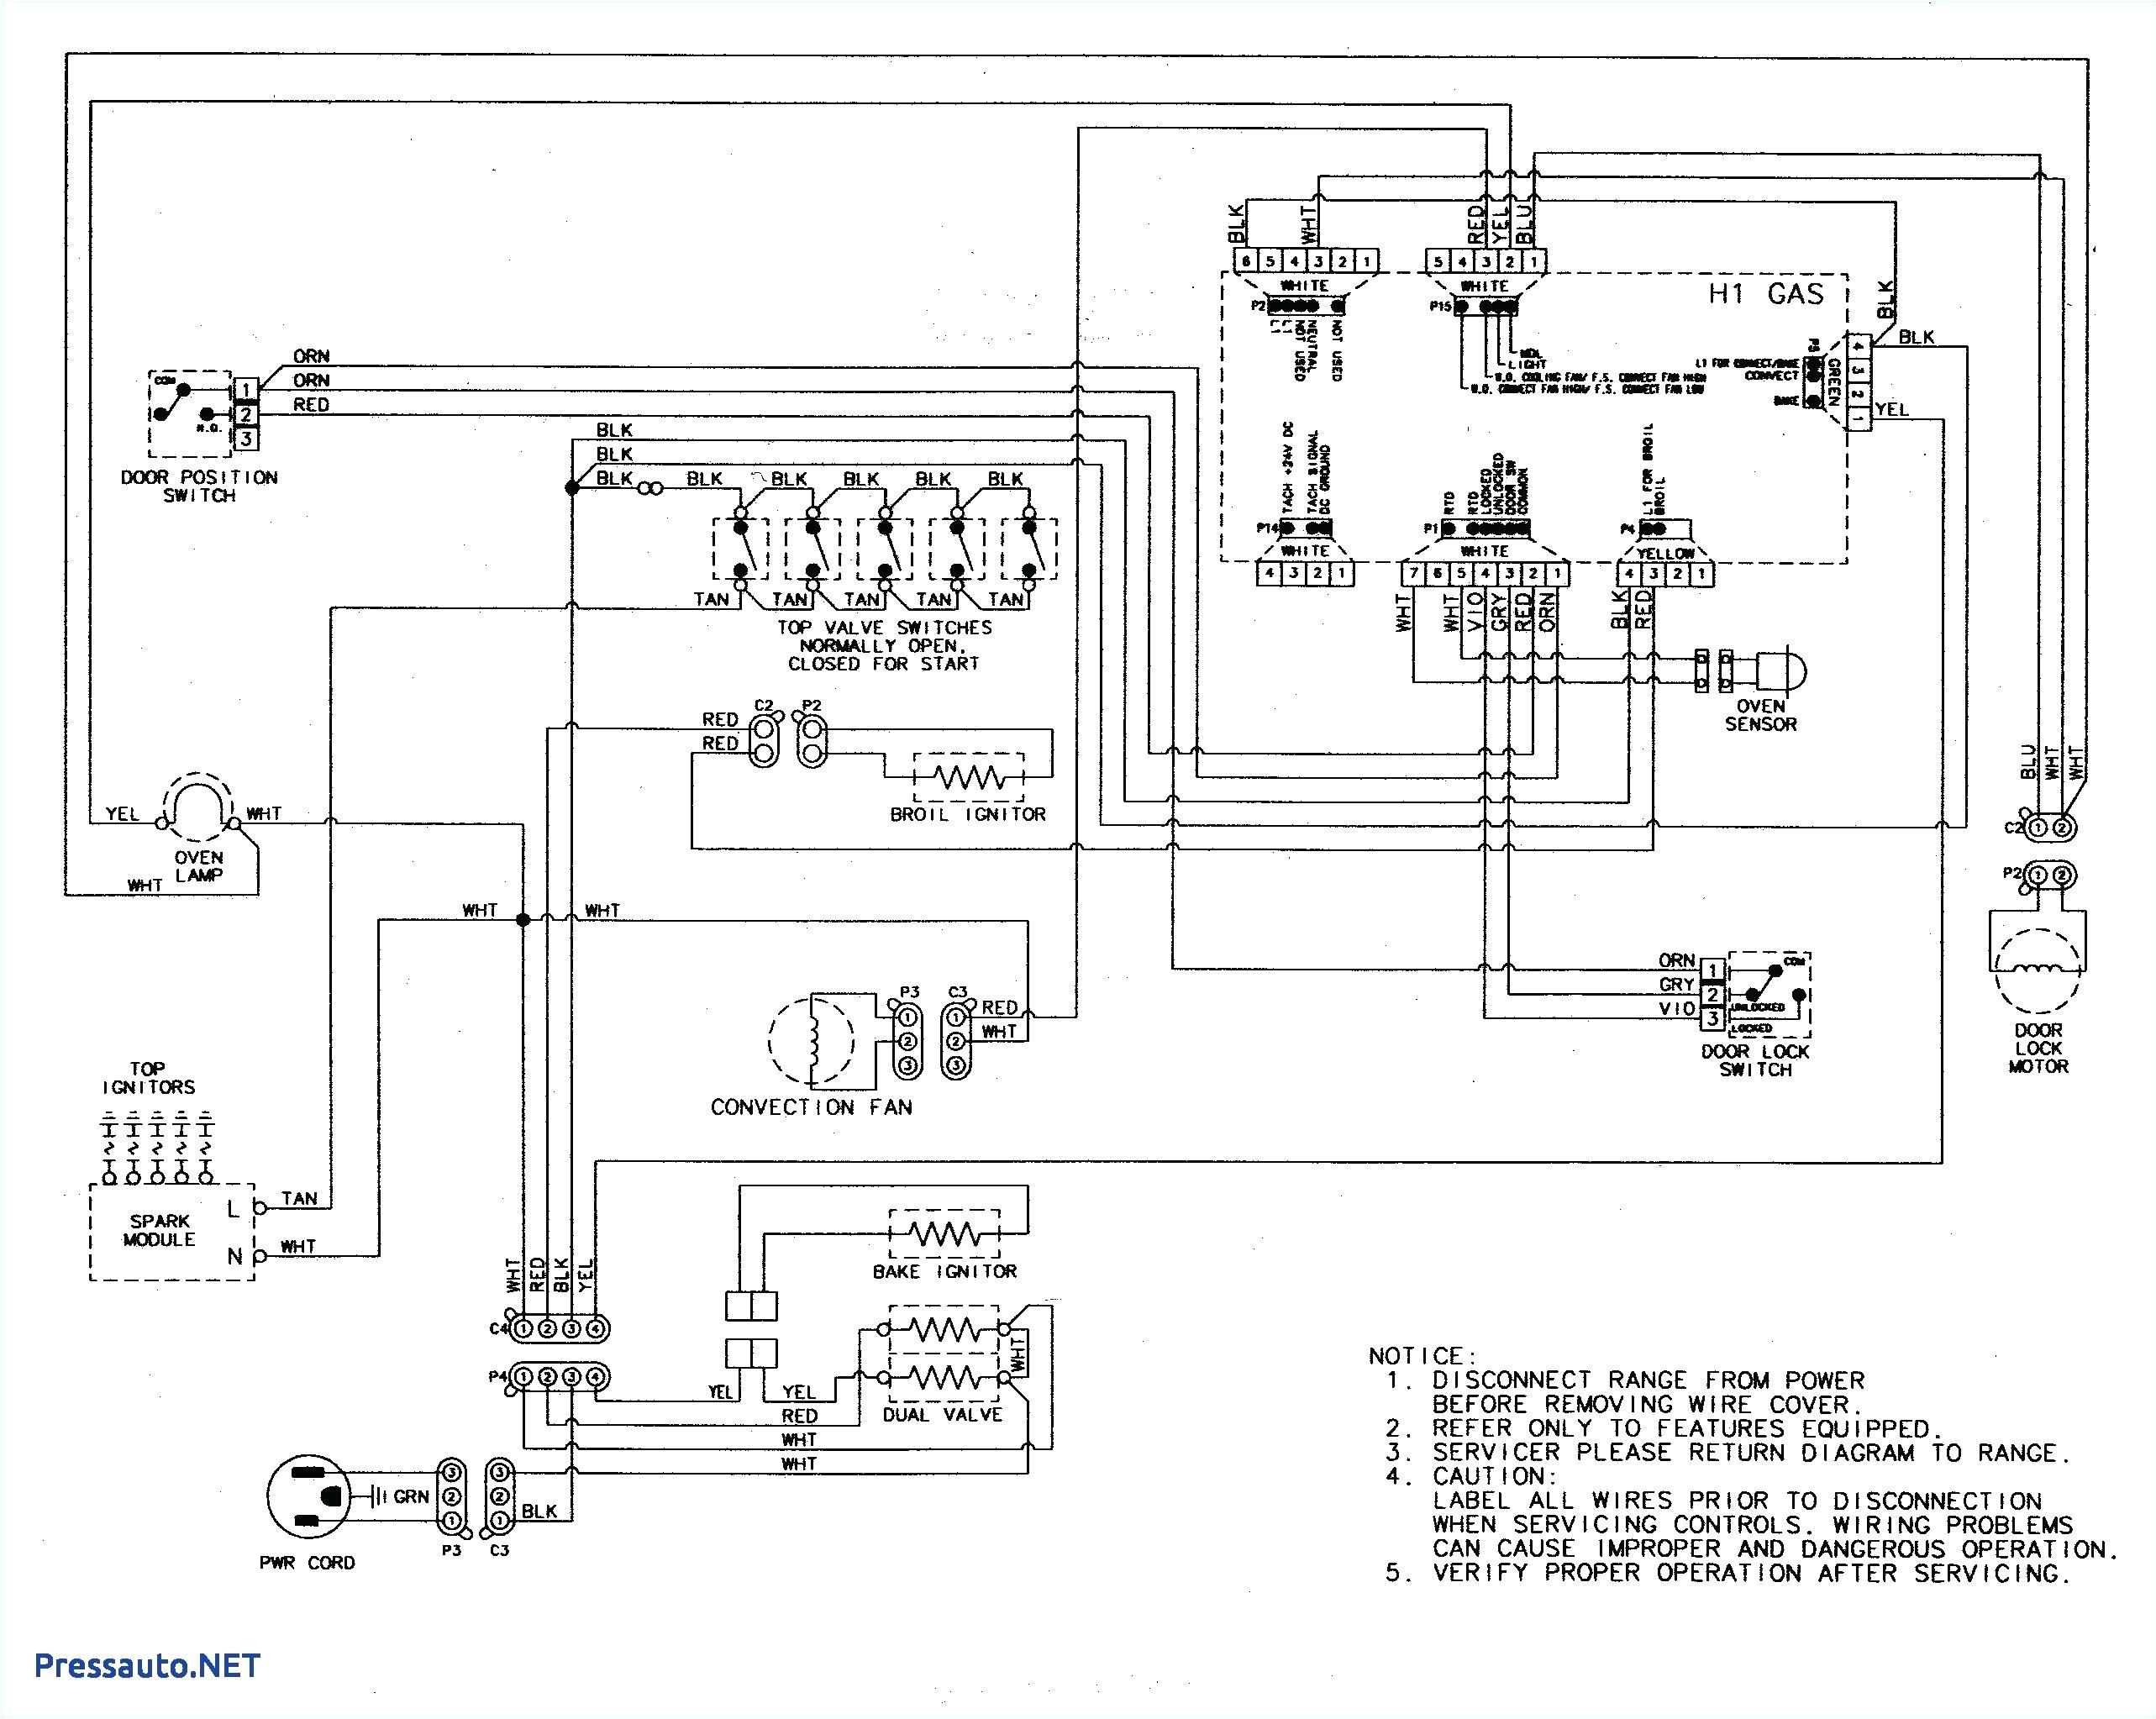 ajj10dfv1 wiring diagram air conditioner